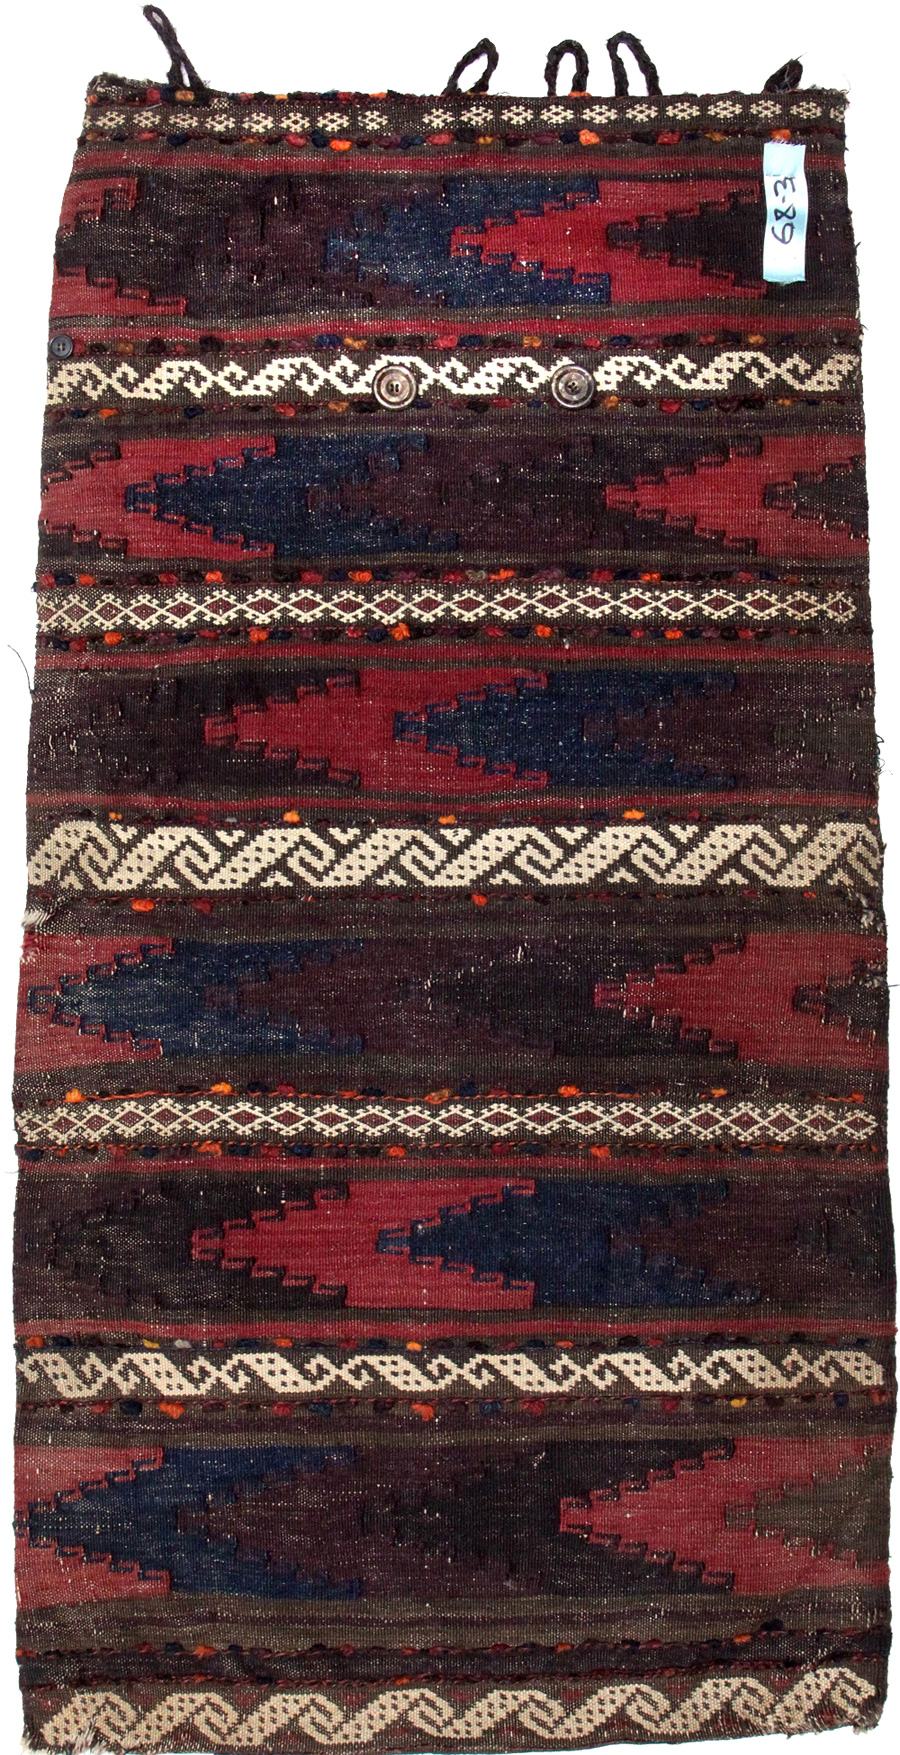 Antique Baluch Bolesht - a Baluch Pillow Bag - the back of the Bolesht - כר שינה בלוצי עתיק - Back To List of Oriental Carpets and Rugs